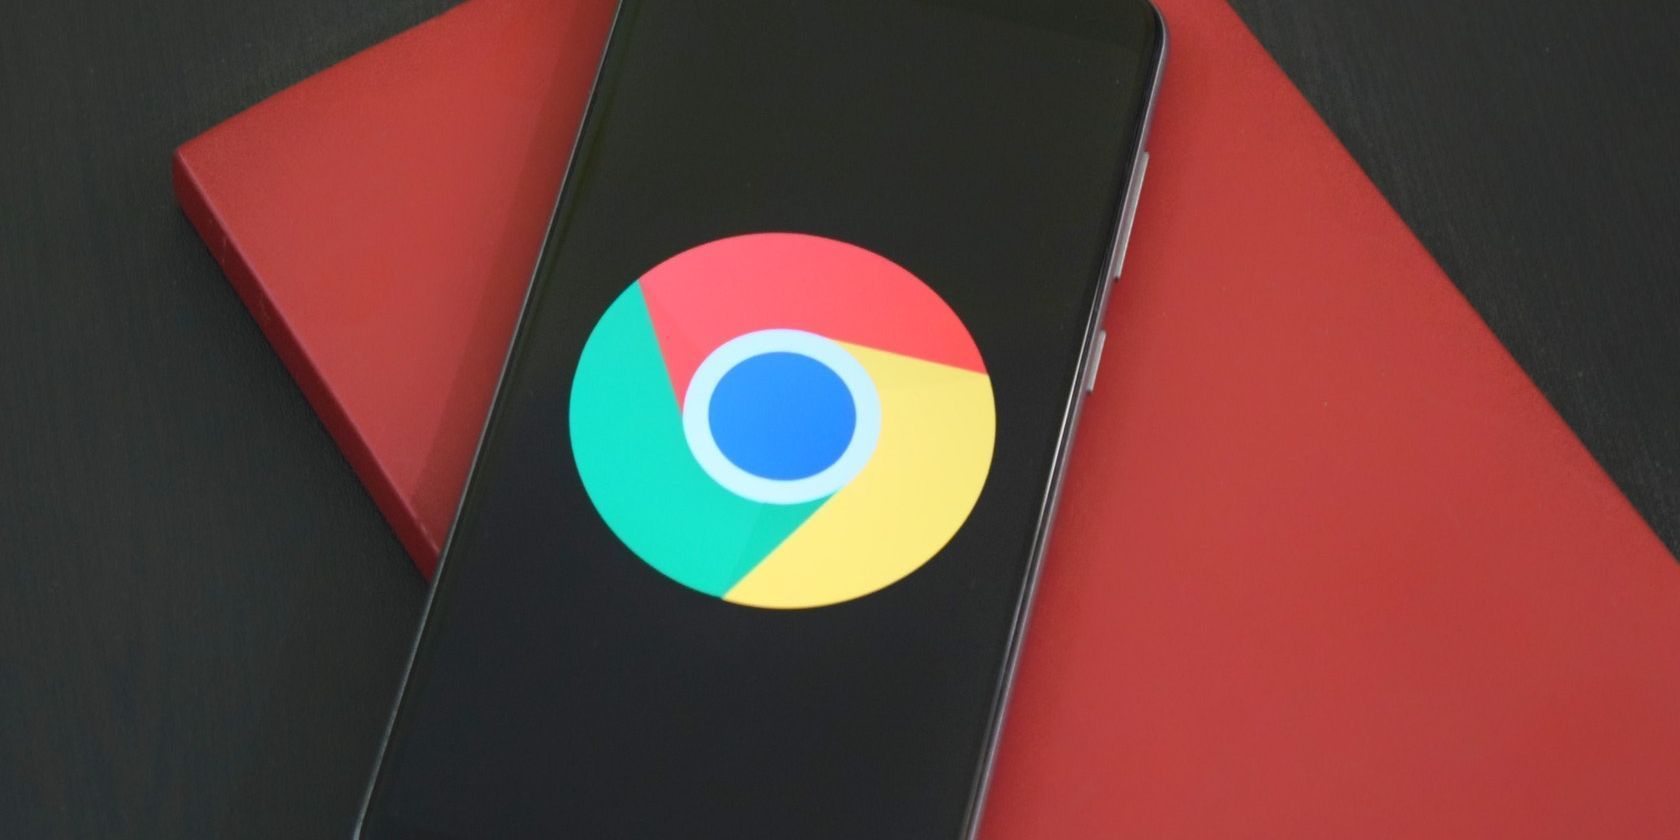 Chrome Symbol on Mobile Phone